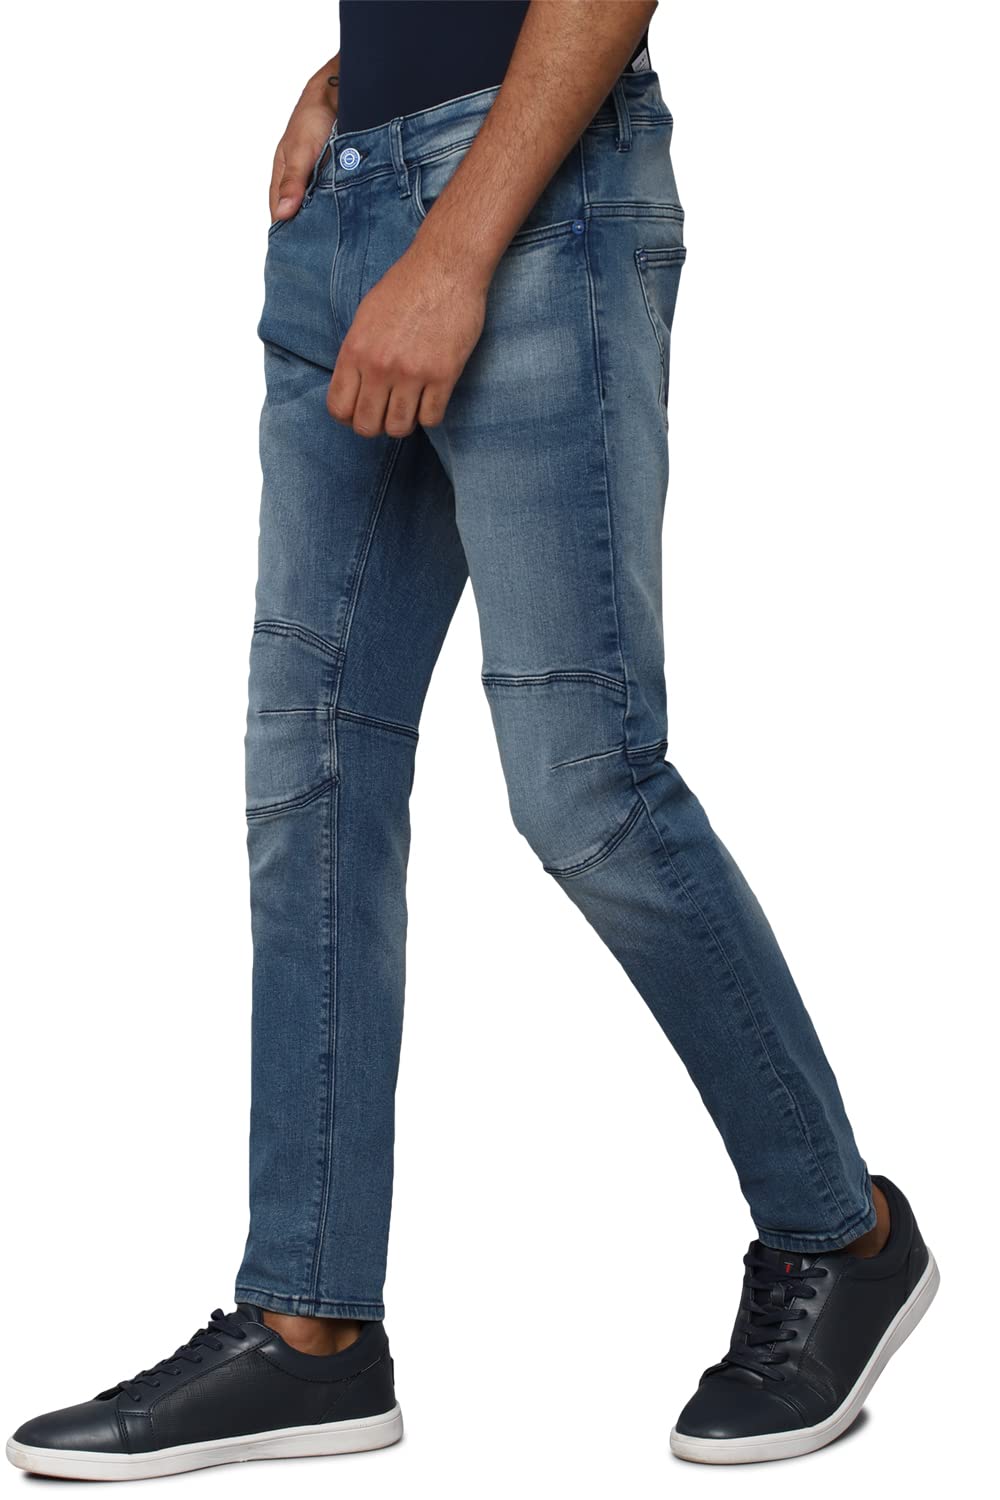 Allen Solly Men's Regular Jeans (ALDNVCTFJ92296_Blue 